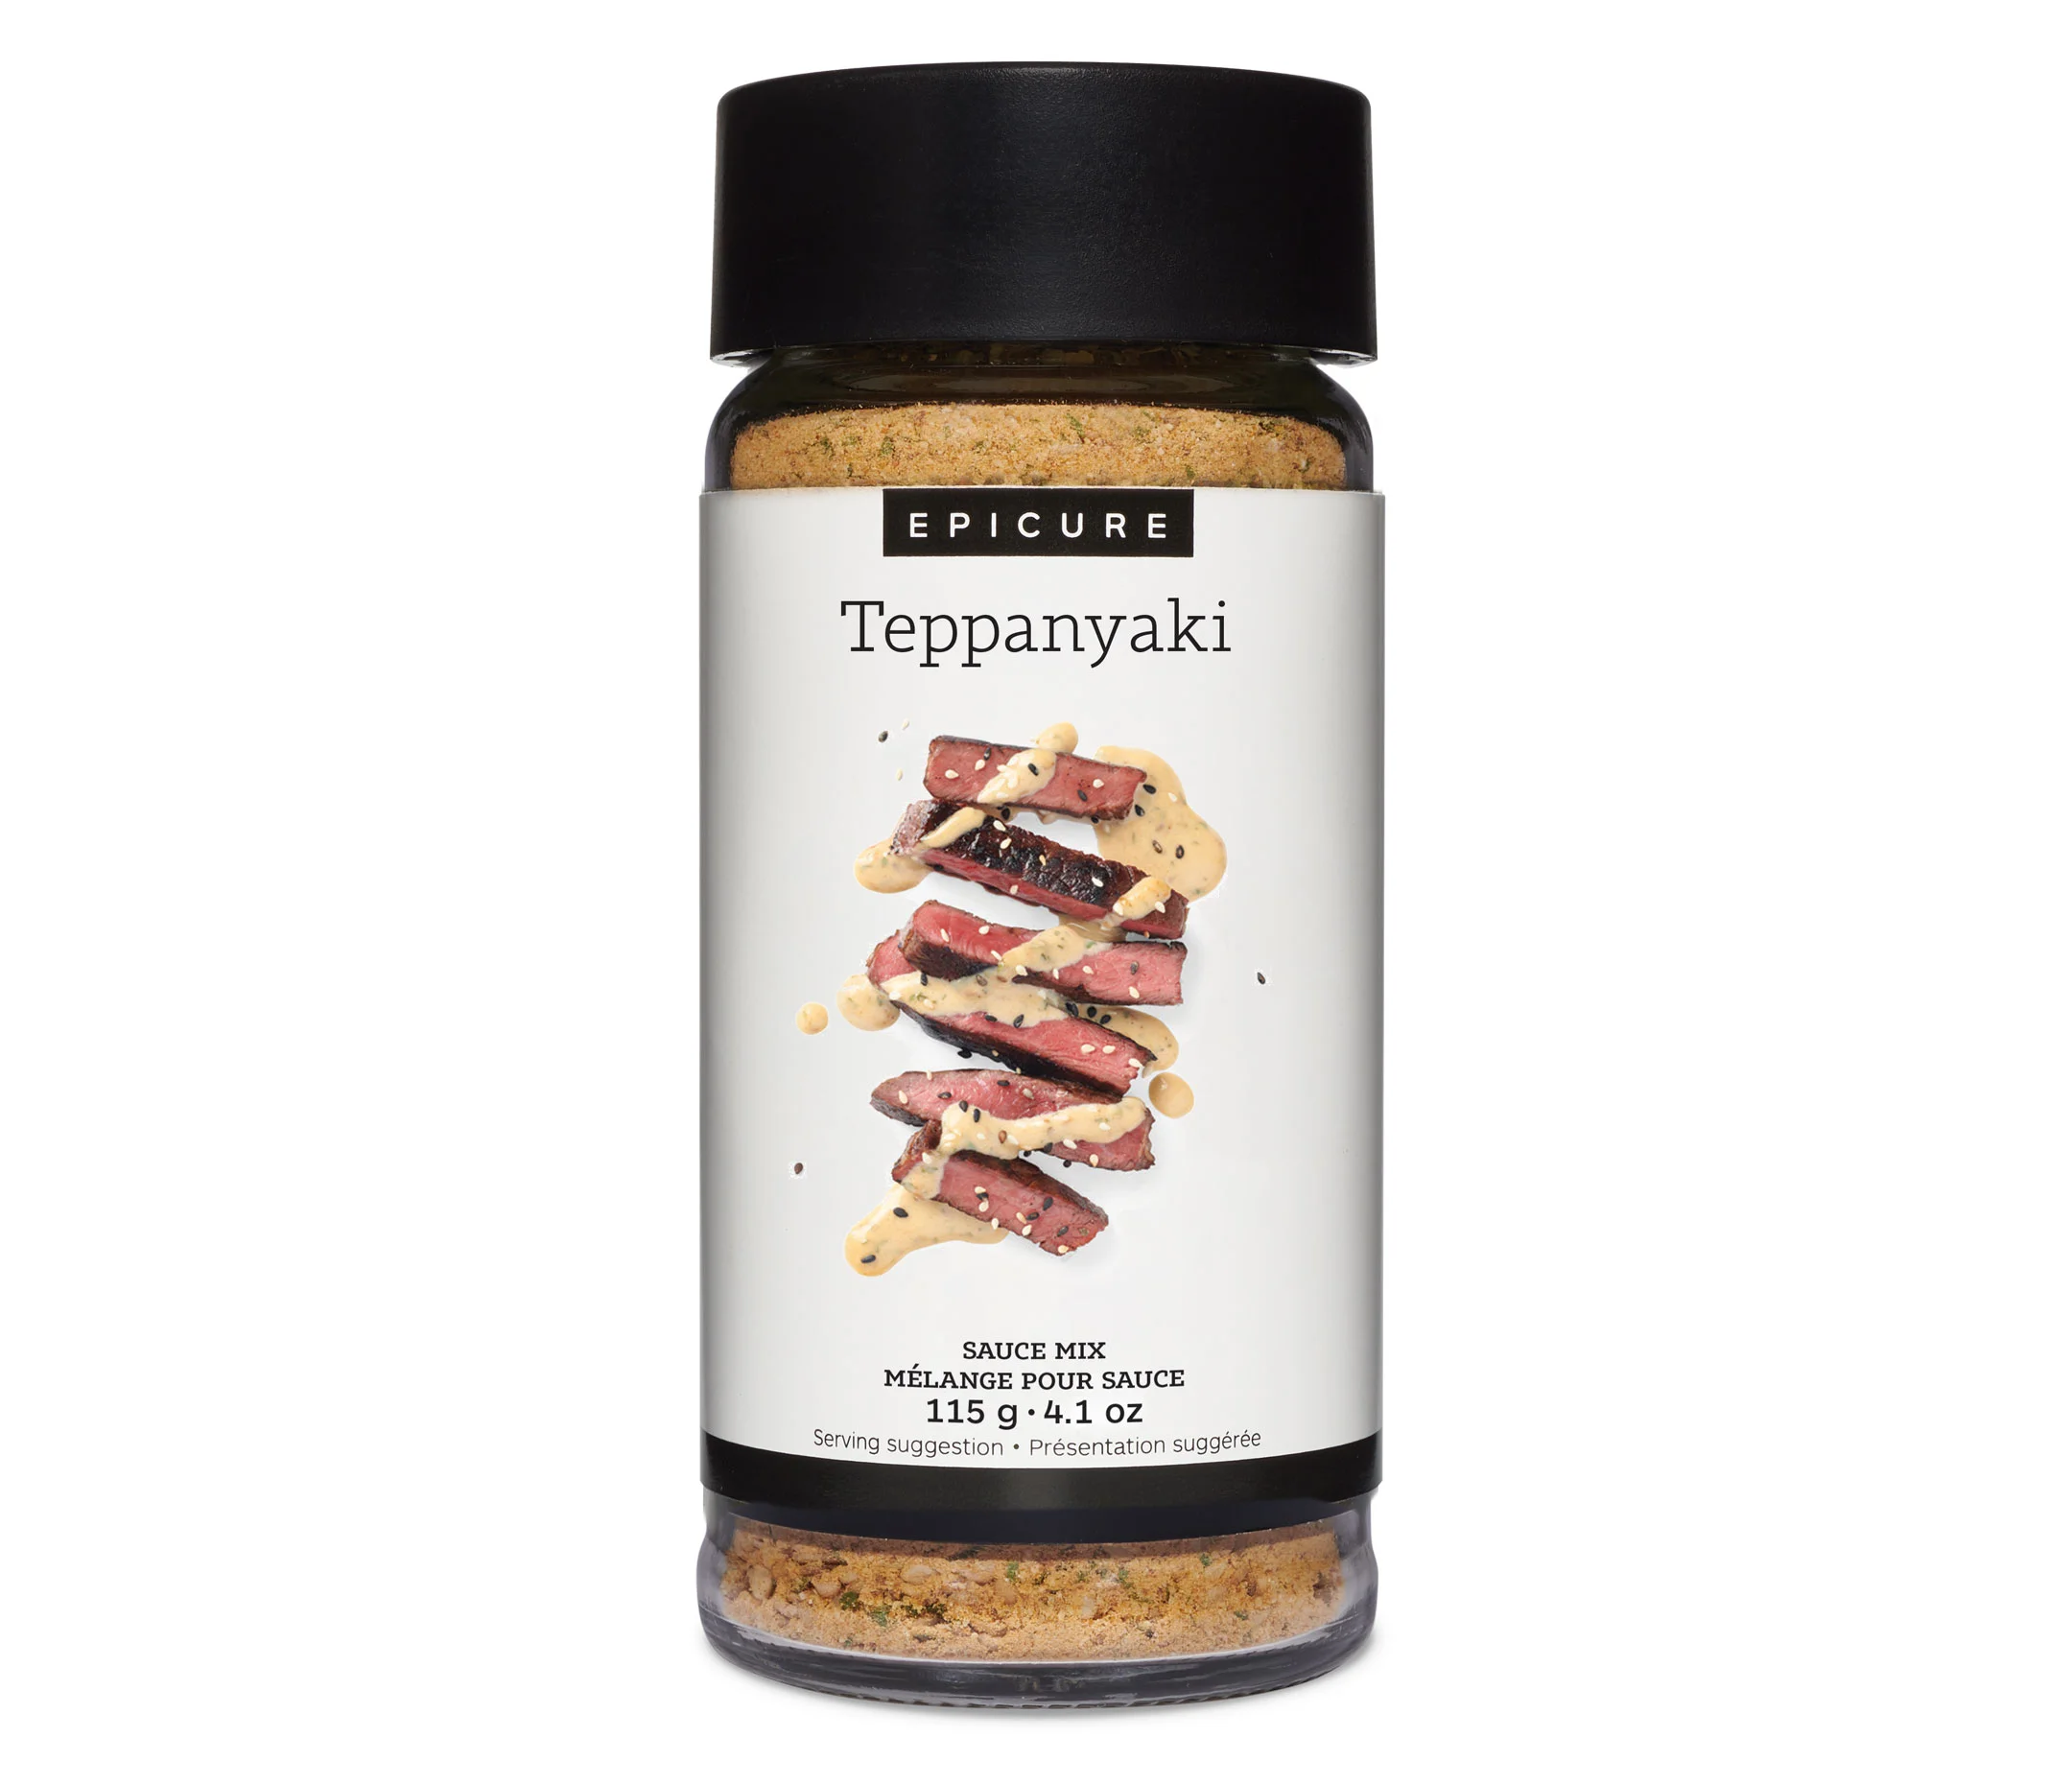 Mélange pour sauce Teppanyaki